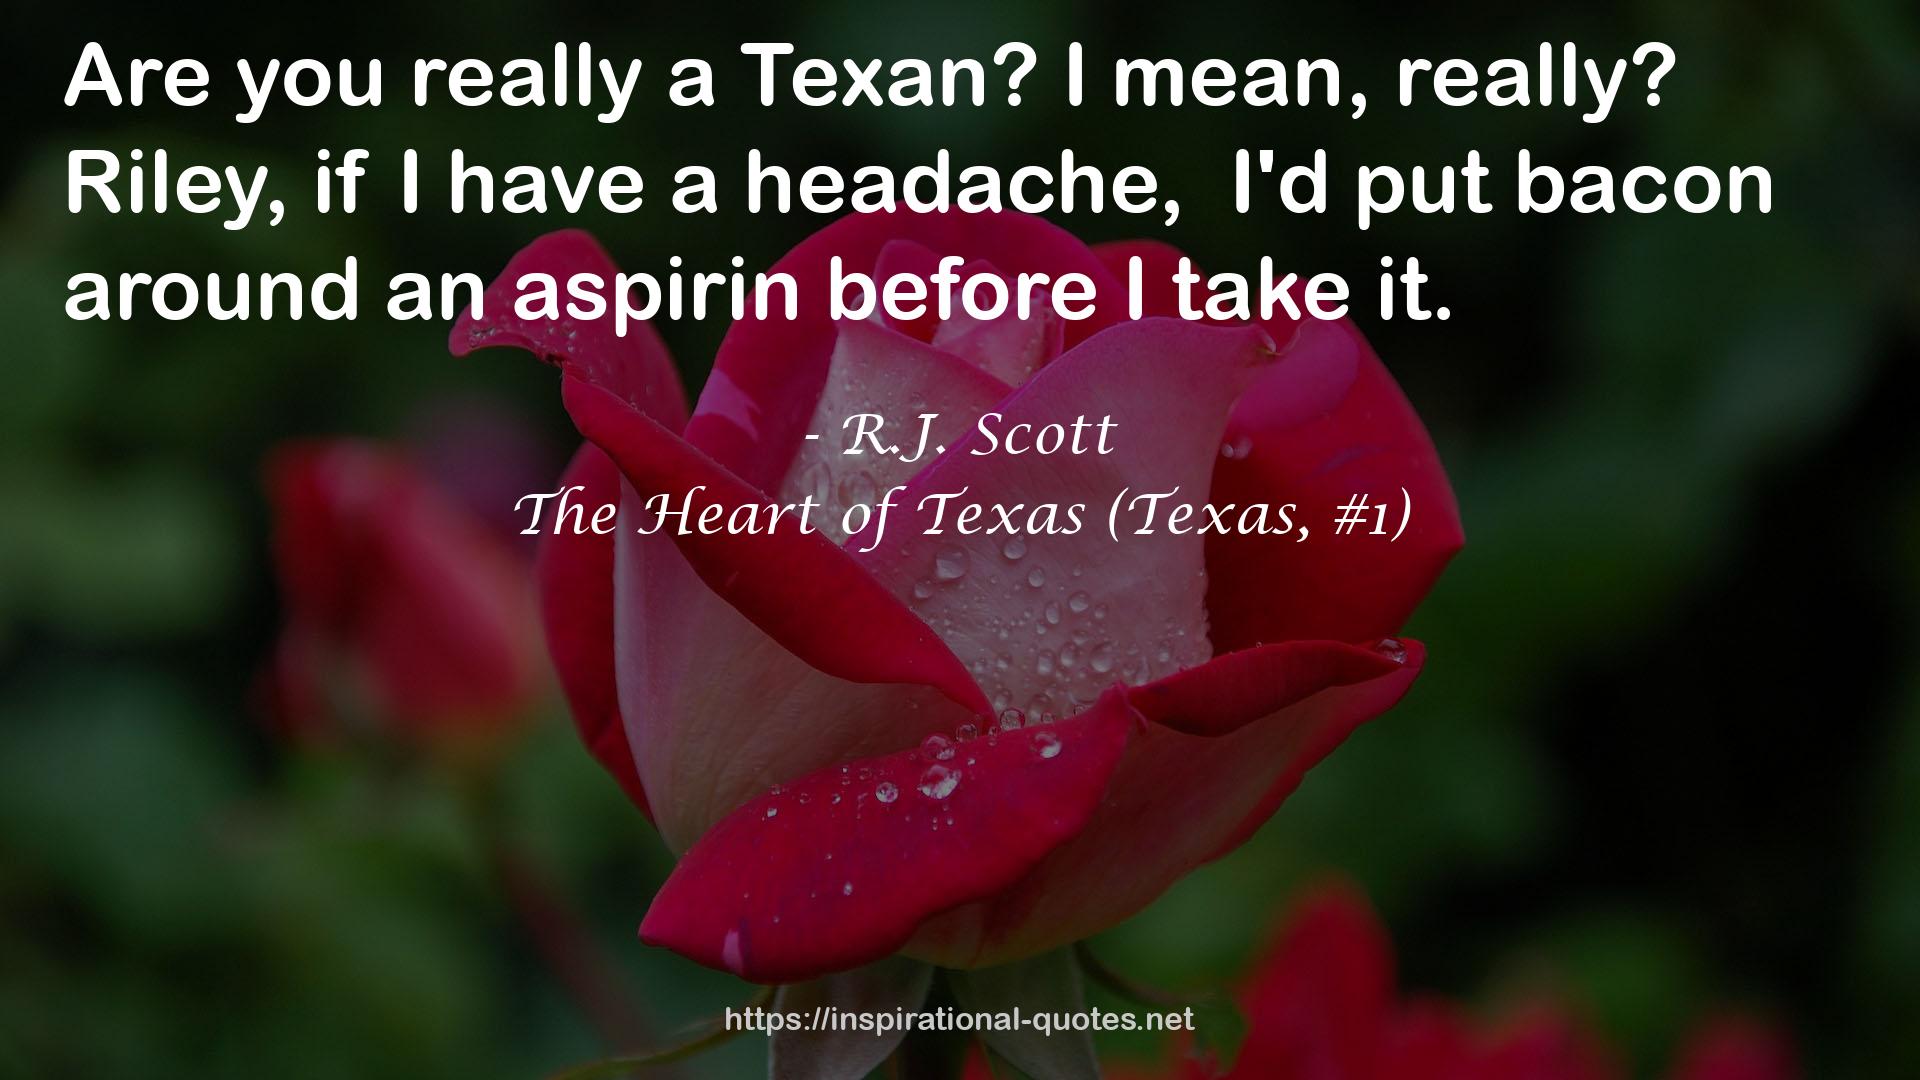 The Heart of Texas (Texas, #1) QUOTES